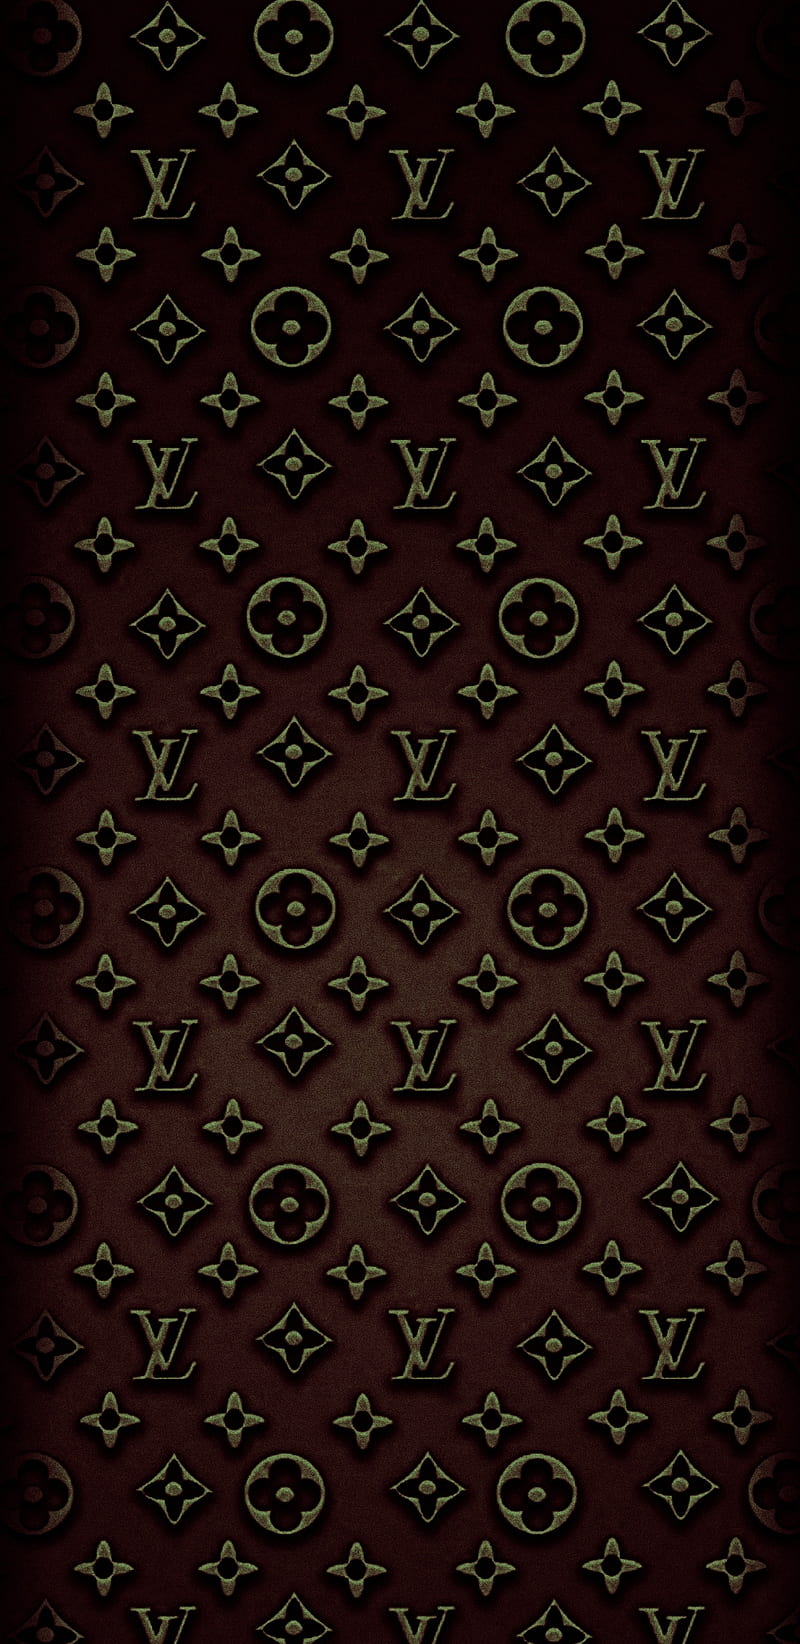 Louis Vuitton (brown) wallpaper  Papel de parede wallpaper, Papeis de  parede, Wallpaper